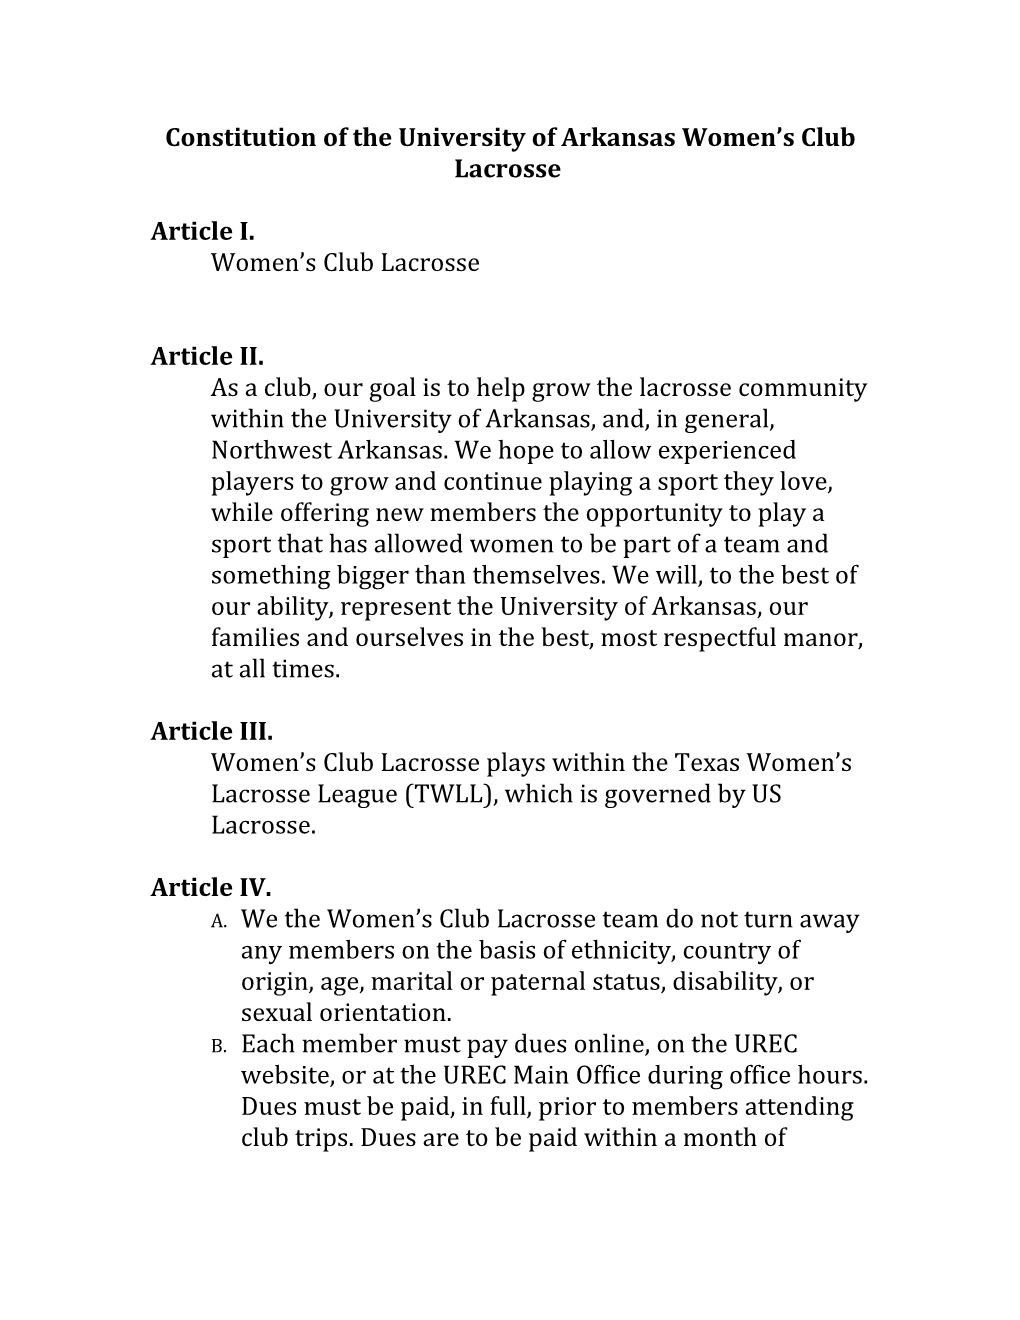 Constitution of the University of Arkansas Women S Club Lacrosse